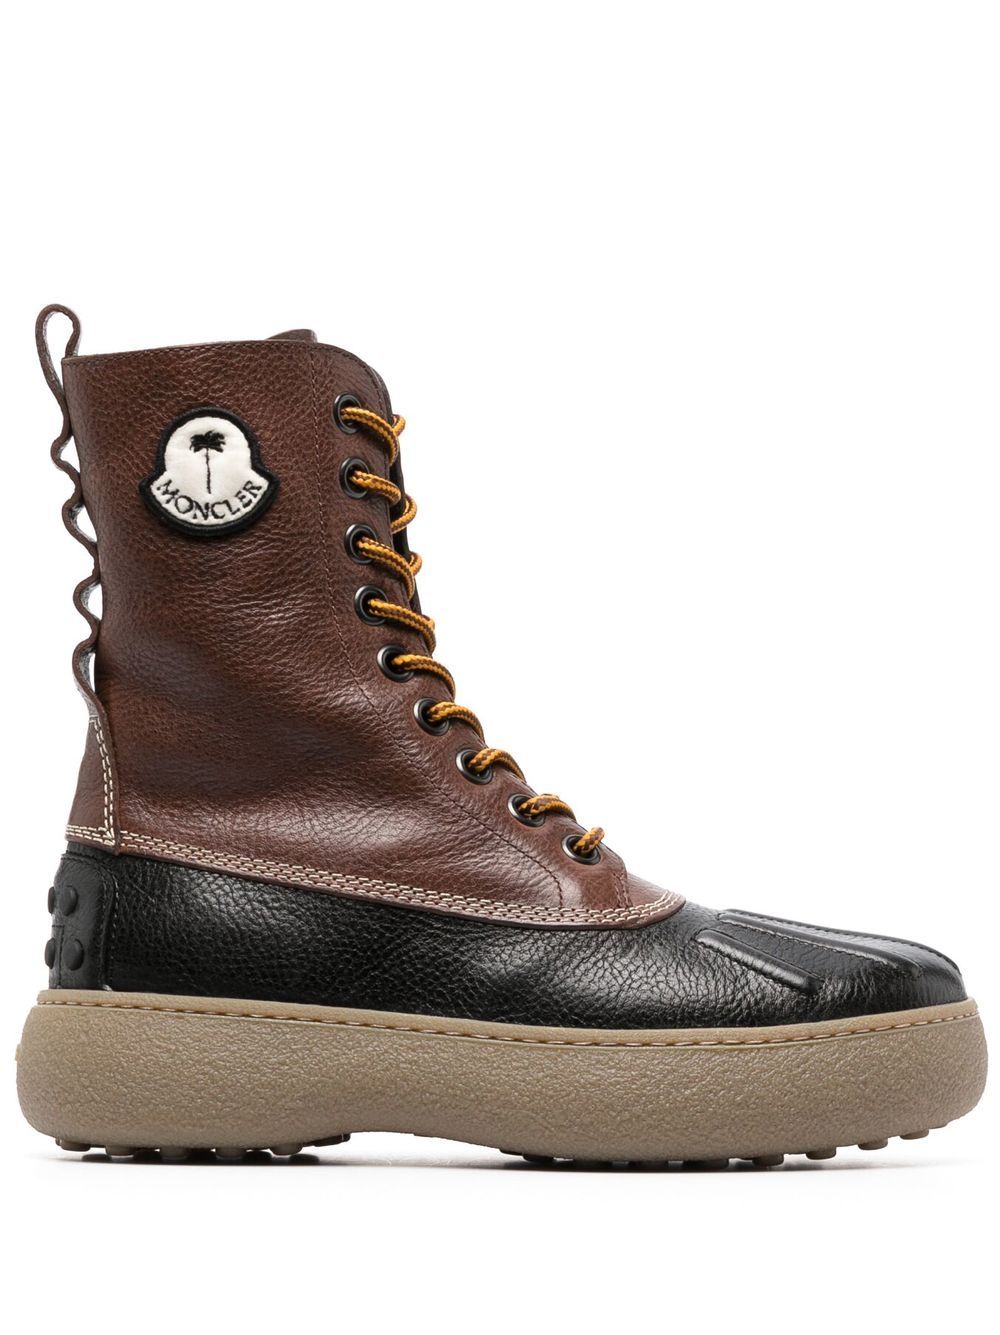 Moncler Genius MONCLER GENIUS- Winter Gommino Leather Boots